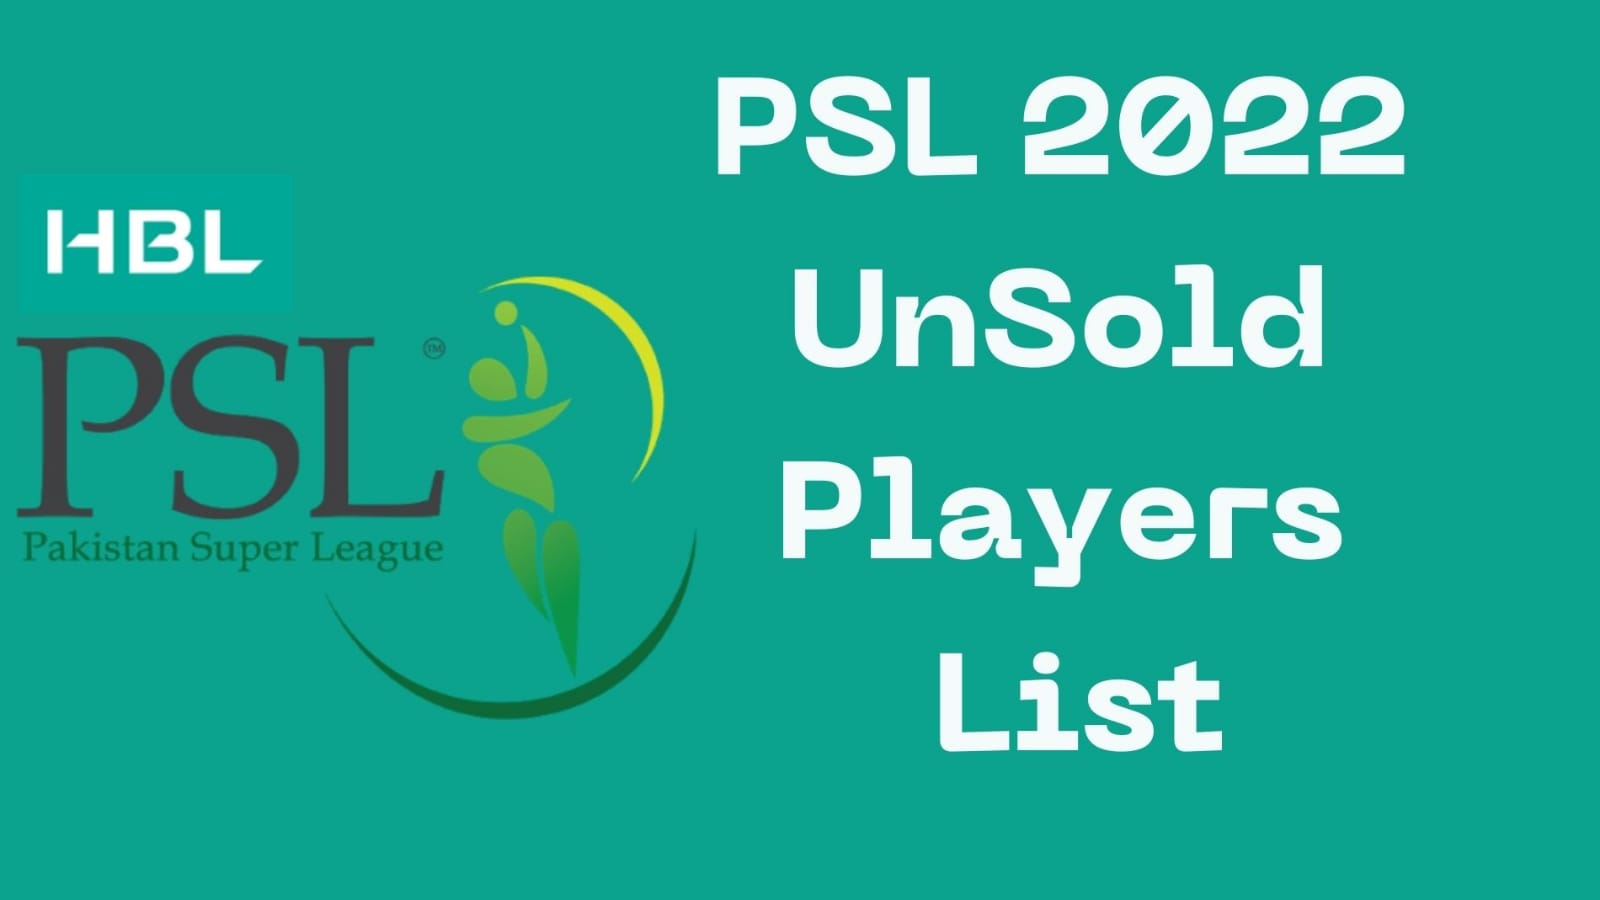 PSL 2022 Unsold Players